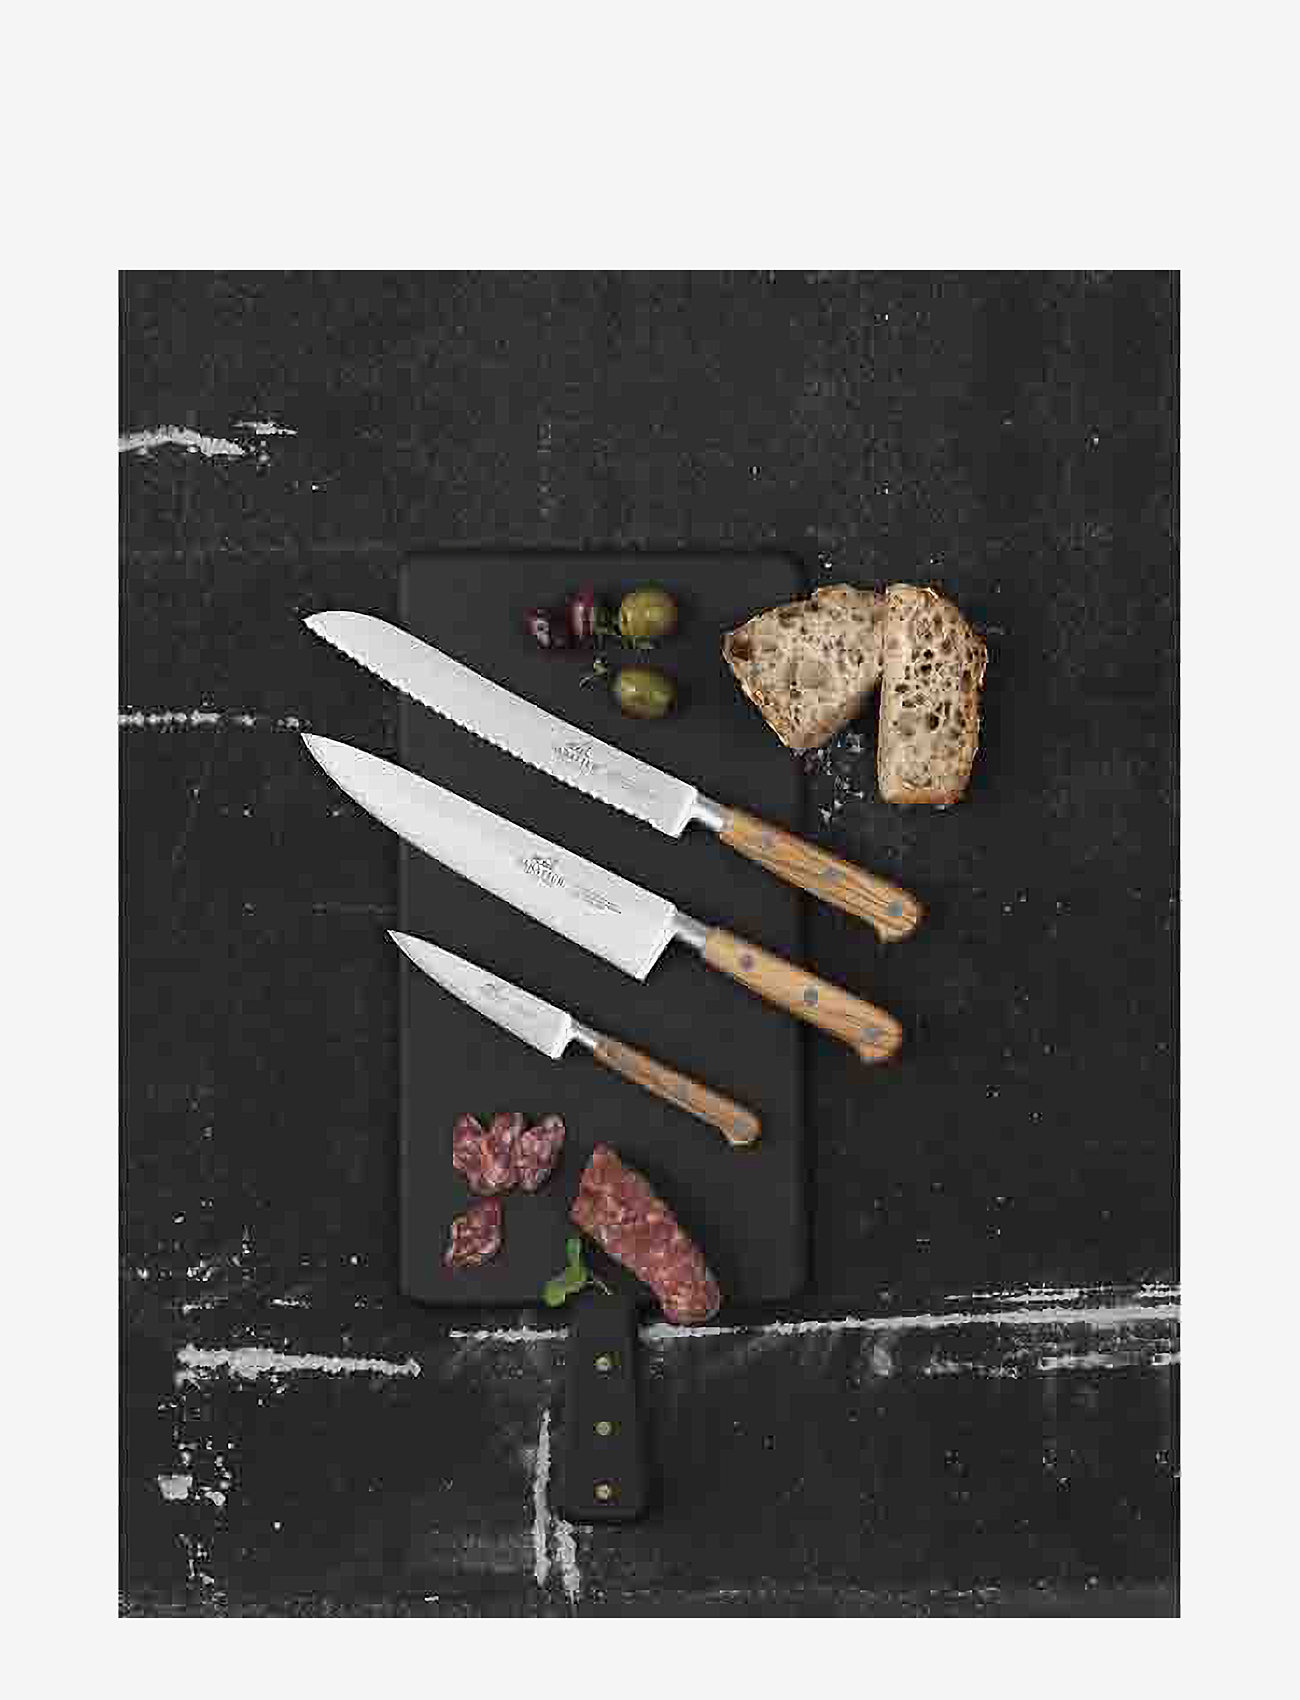 Lion Sabatier - Herb knife Ideal Provence 10cm - daržovių peiliai - steel/wood - 1